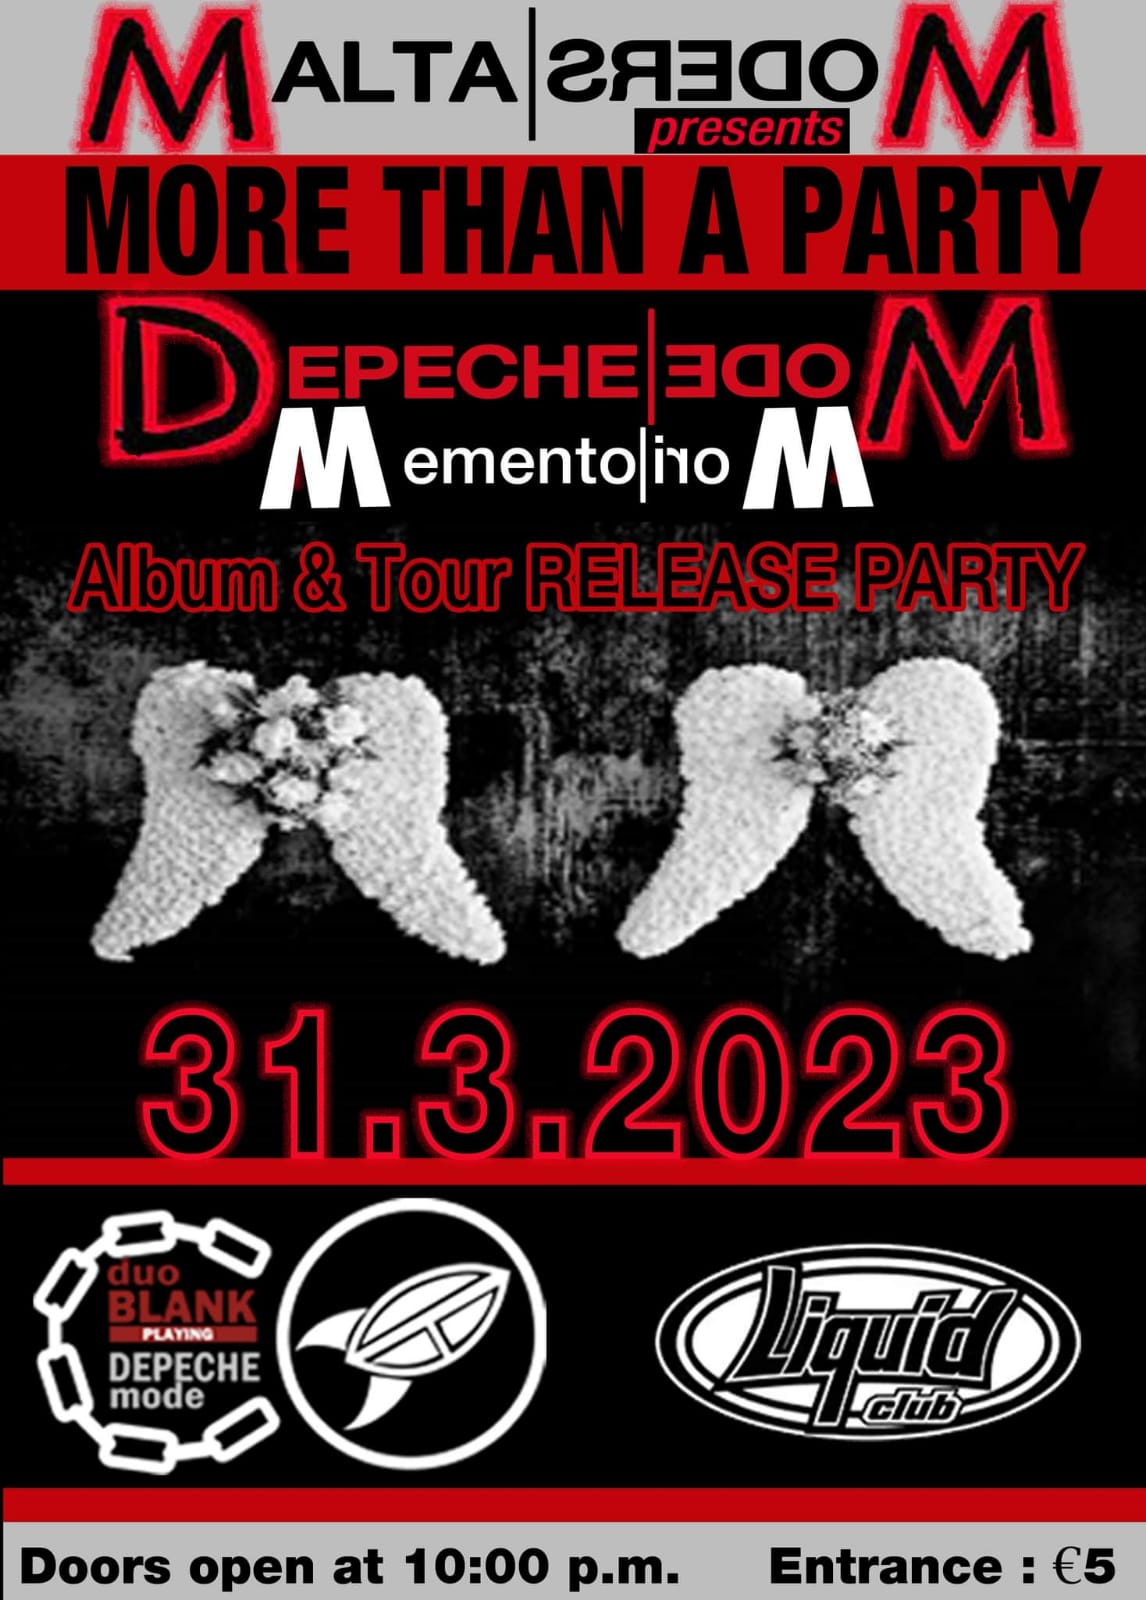 More Than a Party - Depeche Mode Memento Mori Album and Tour Release Party poster